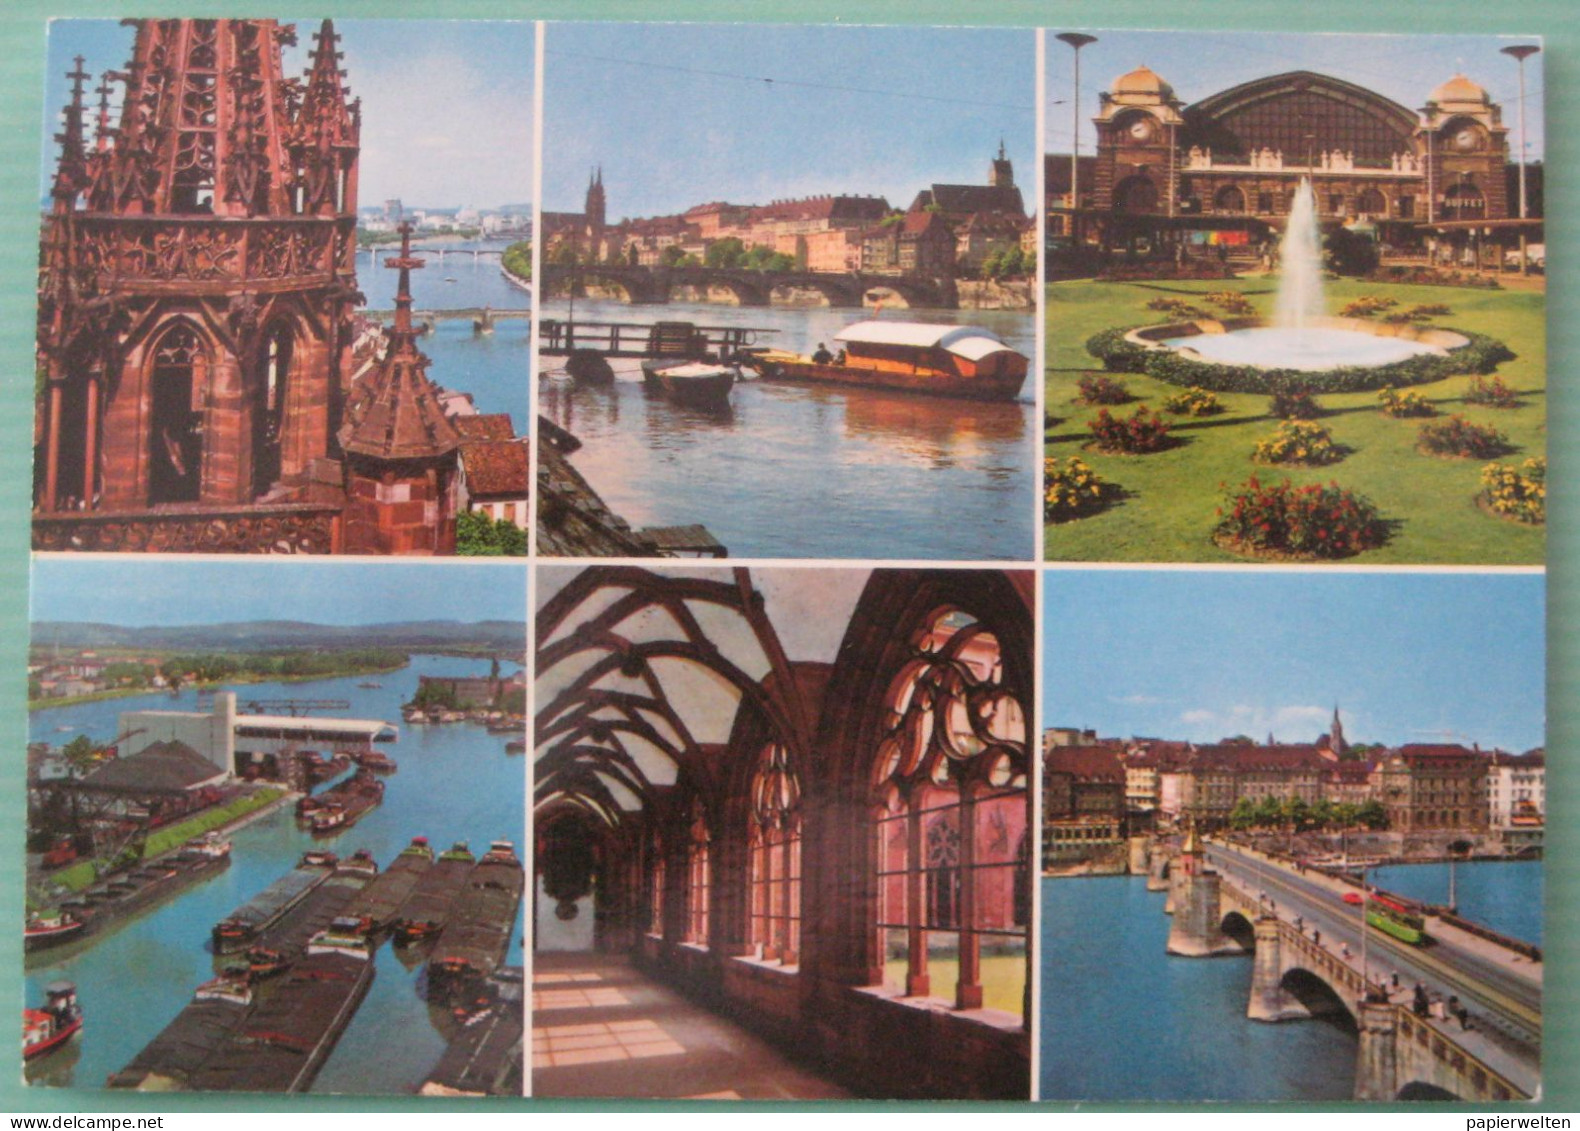 Basel - Mehrbildkarte - Basel